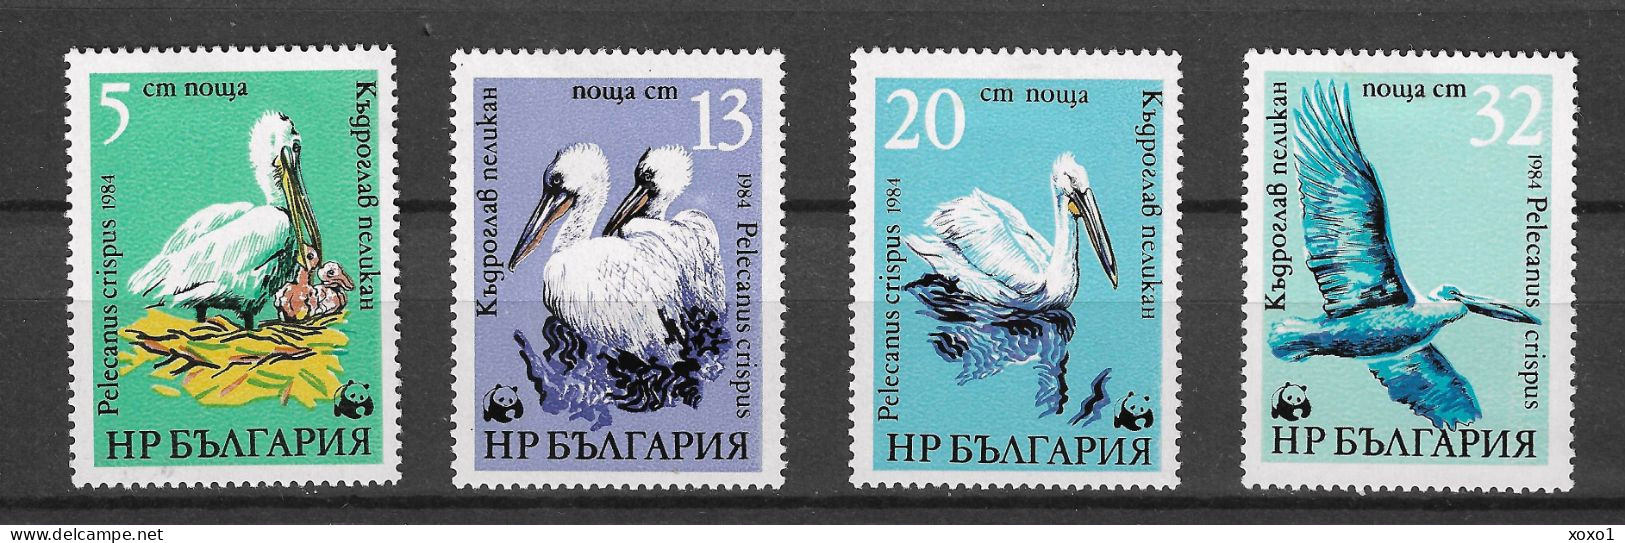 Bulgaria 1984 MiNr. 3303 - 3306 Bulgarien Birds Dalmatian Pelicans WWF 4v MLH * 6.50 € - Pelícanos